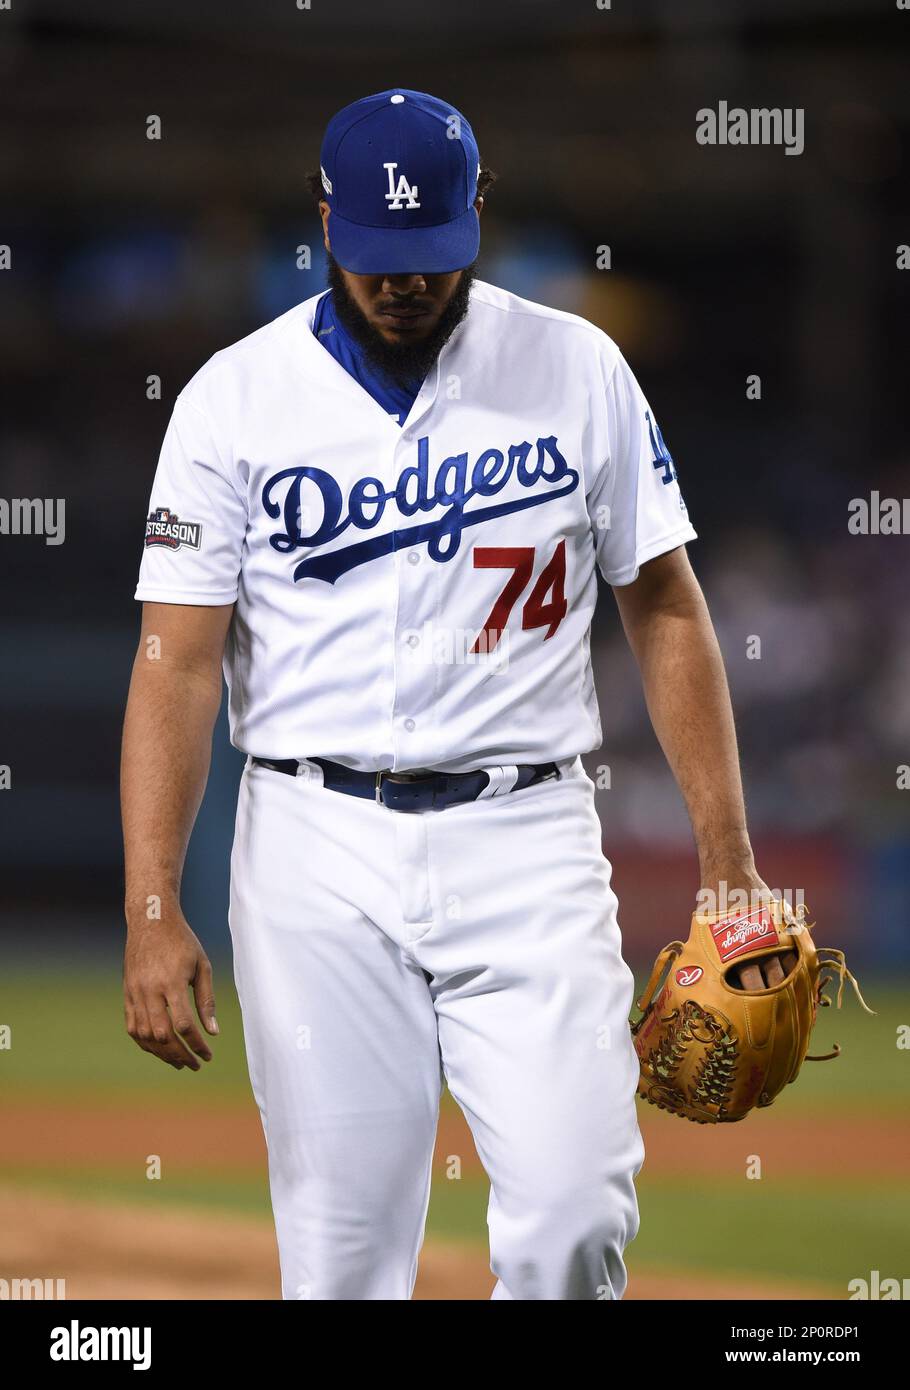 LOS ANGELES, CA - OCTOBER 18: Los Angeles Dodgers Pitcher Kenley